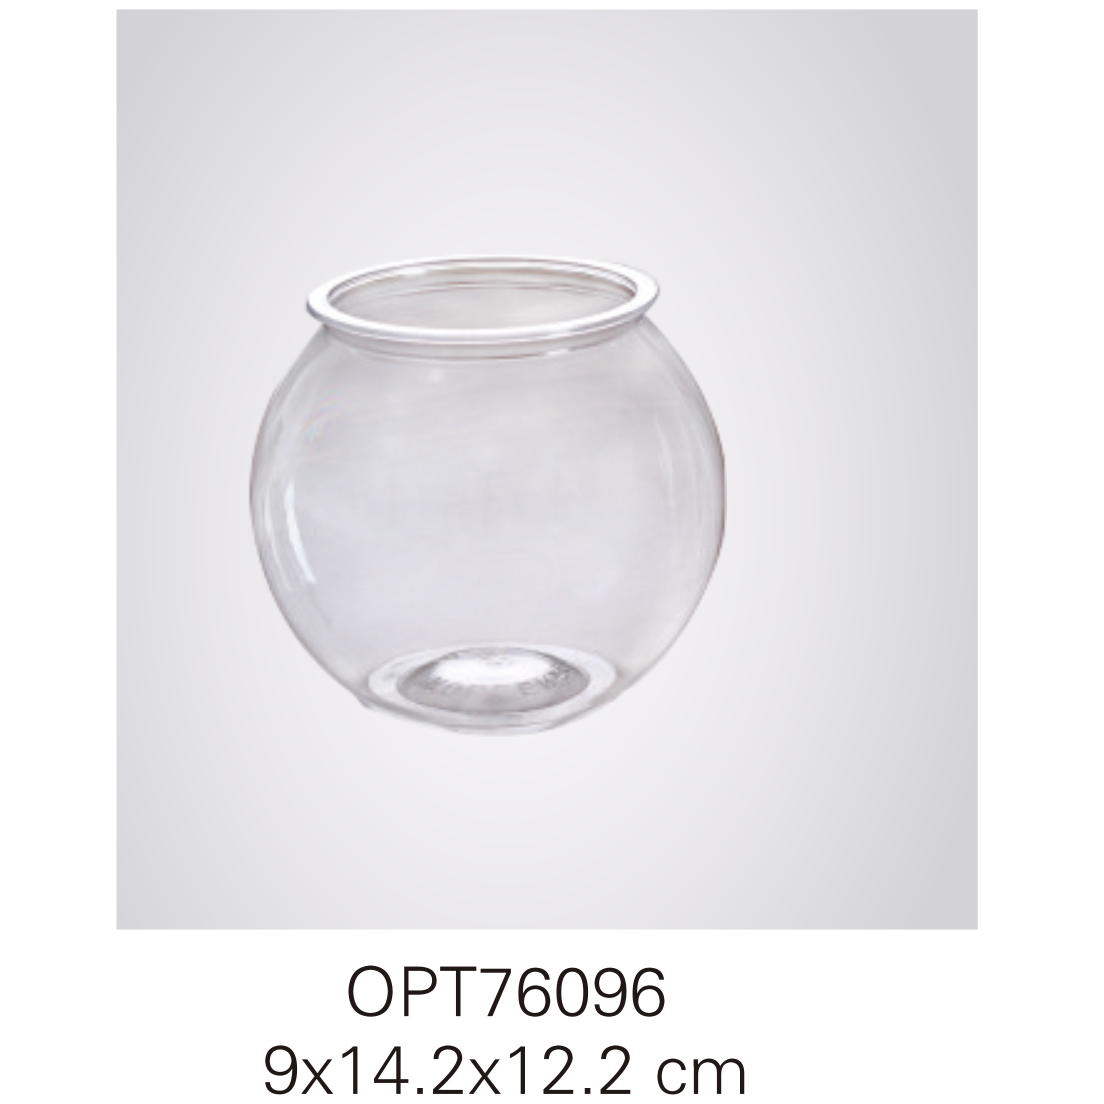 OPT76096 9x14.2x12.2cm fishbowls